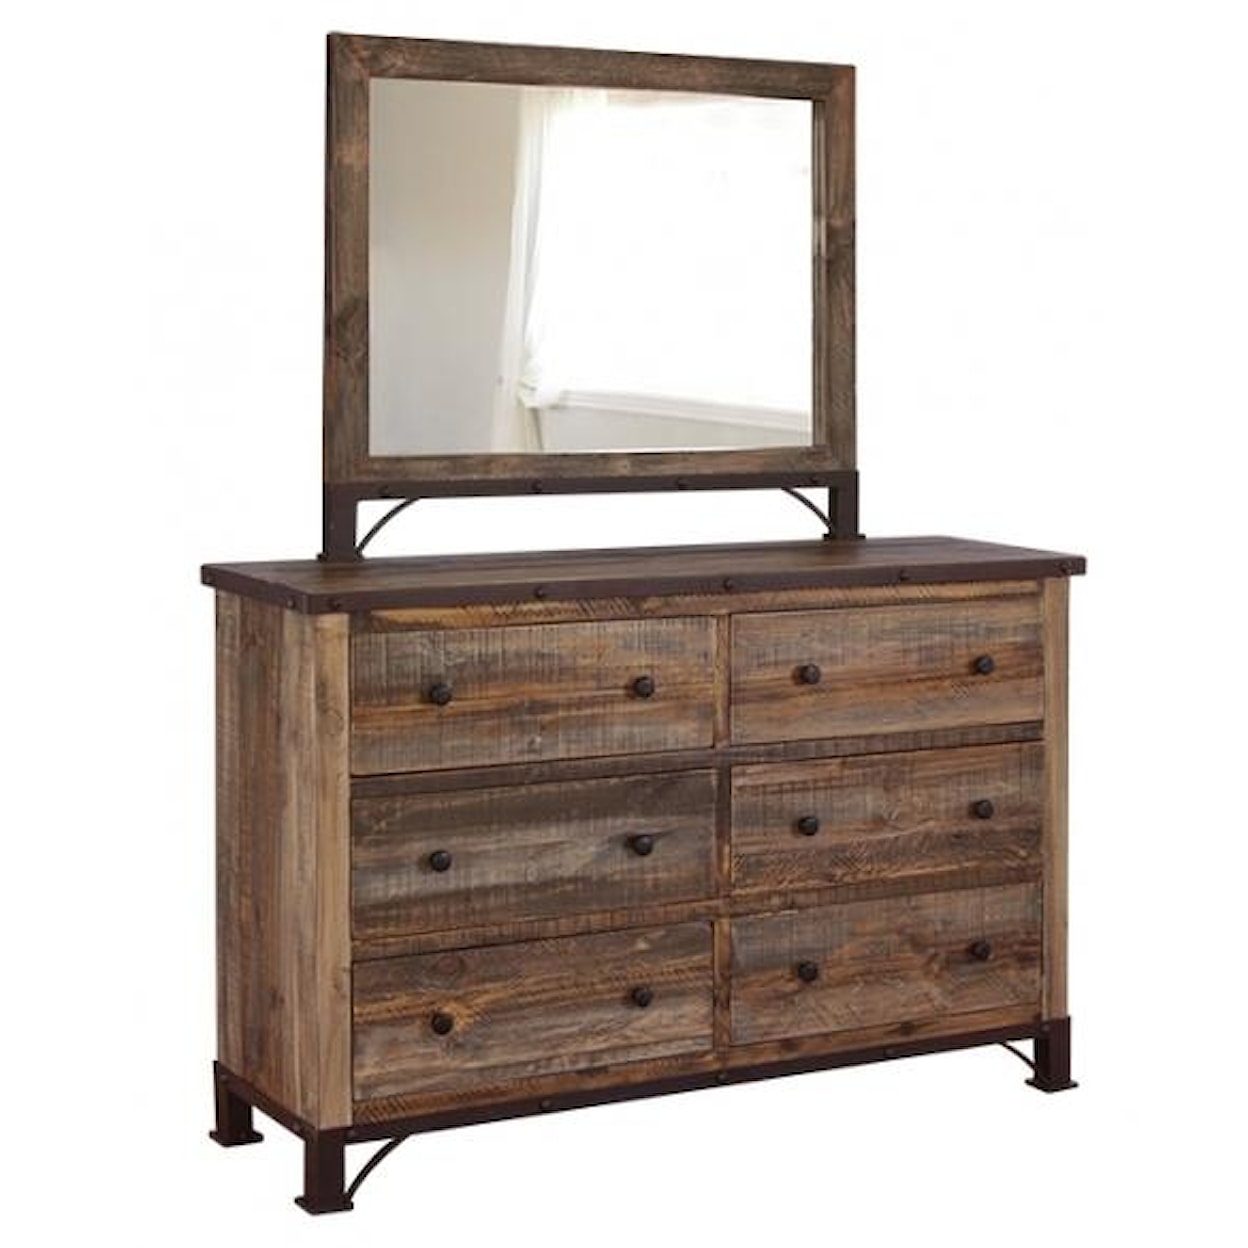 International Furniture Direct 900 Antique Dresser and Mirror